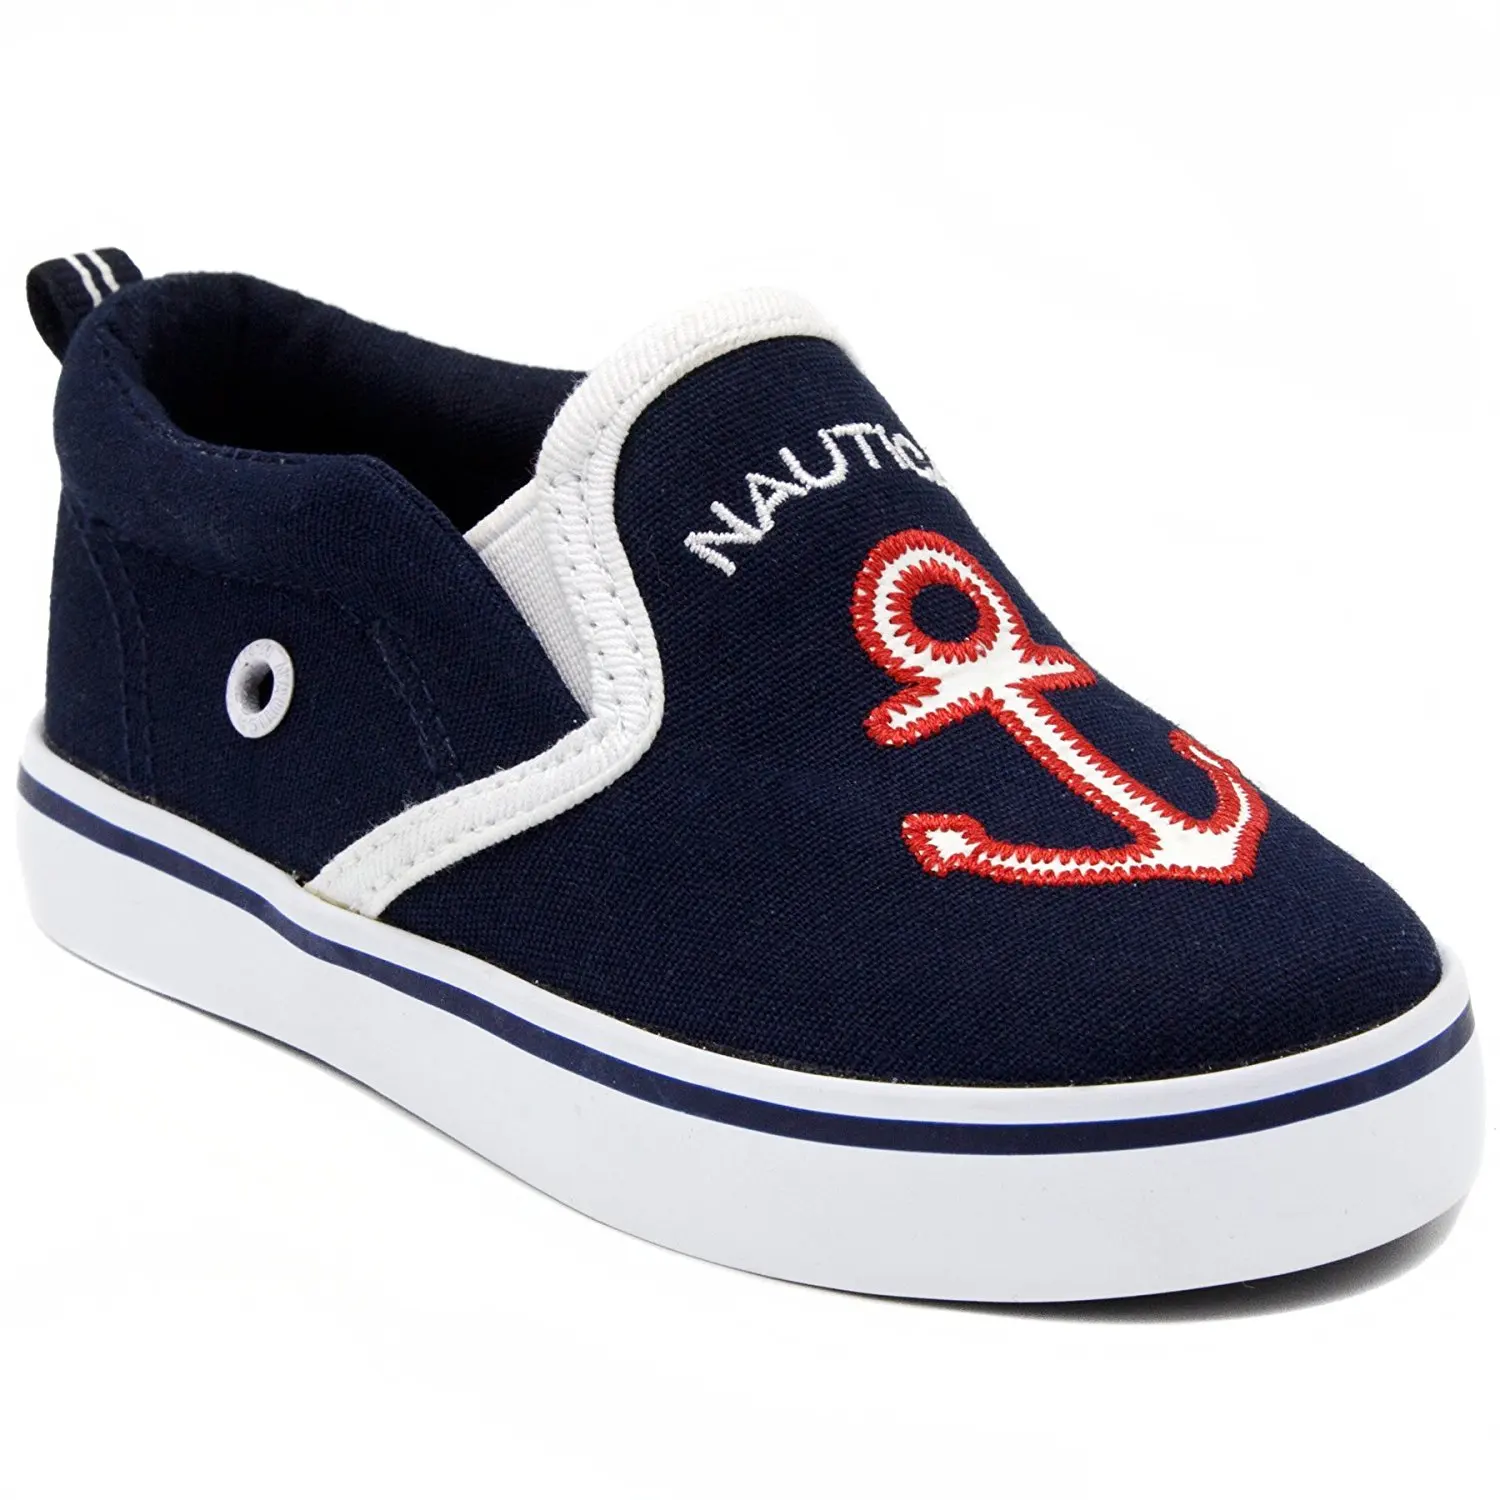 nautica children's shoes